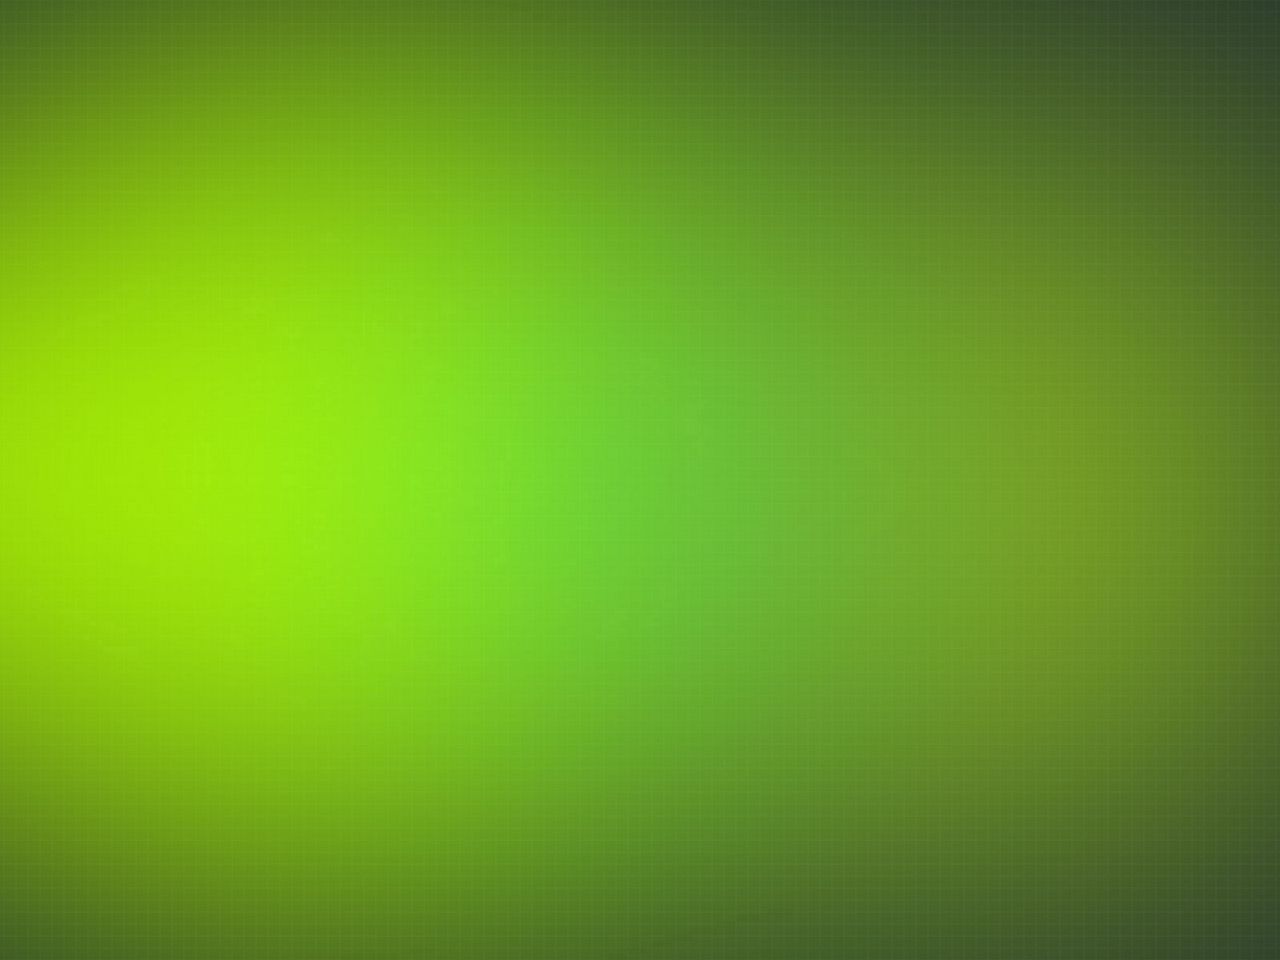 Download wallpaper 1280x960 shape, bright, green, pale standard 4:3 HD background